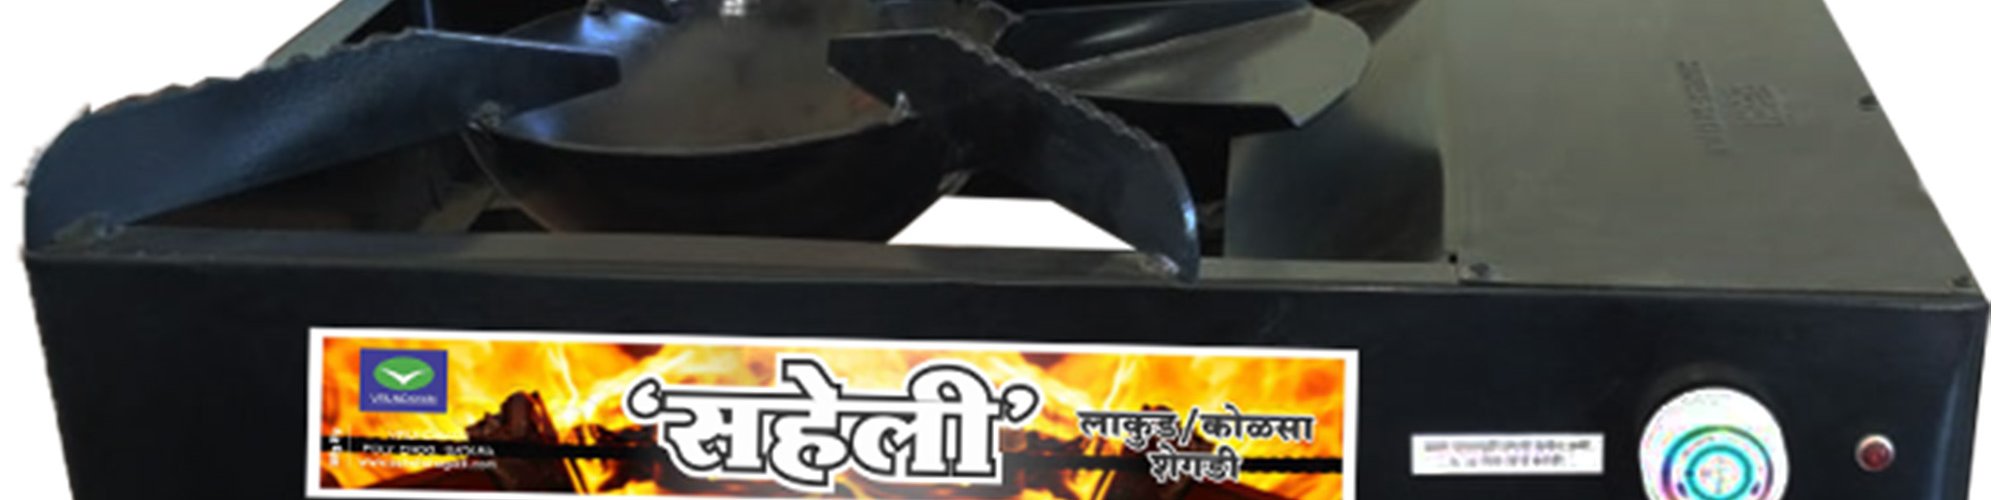 Saheli shegadi | Multipurpose Wood and coal stove